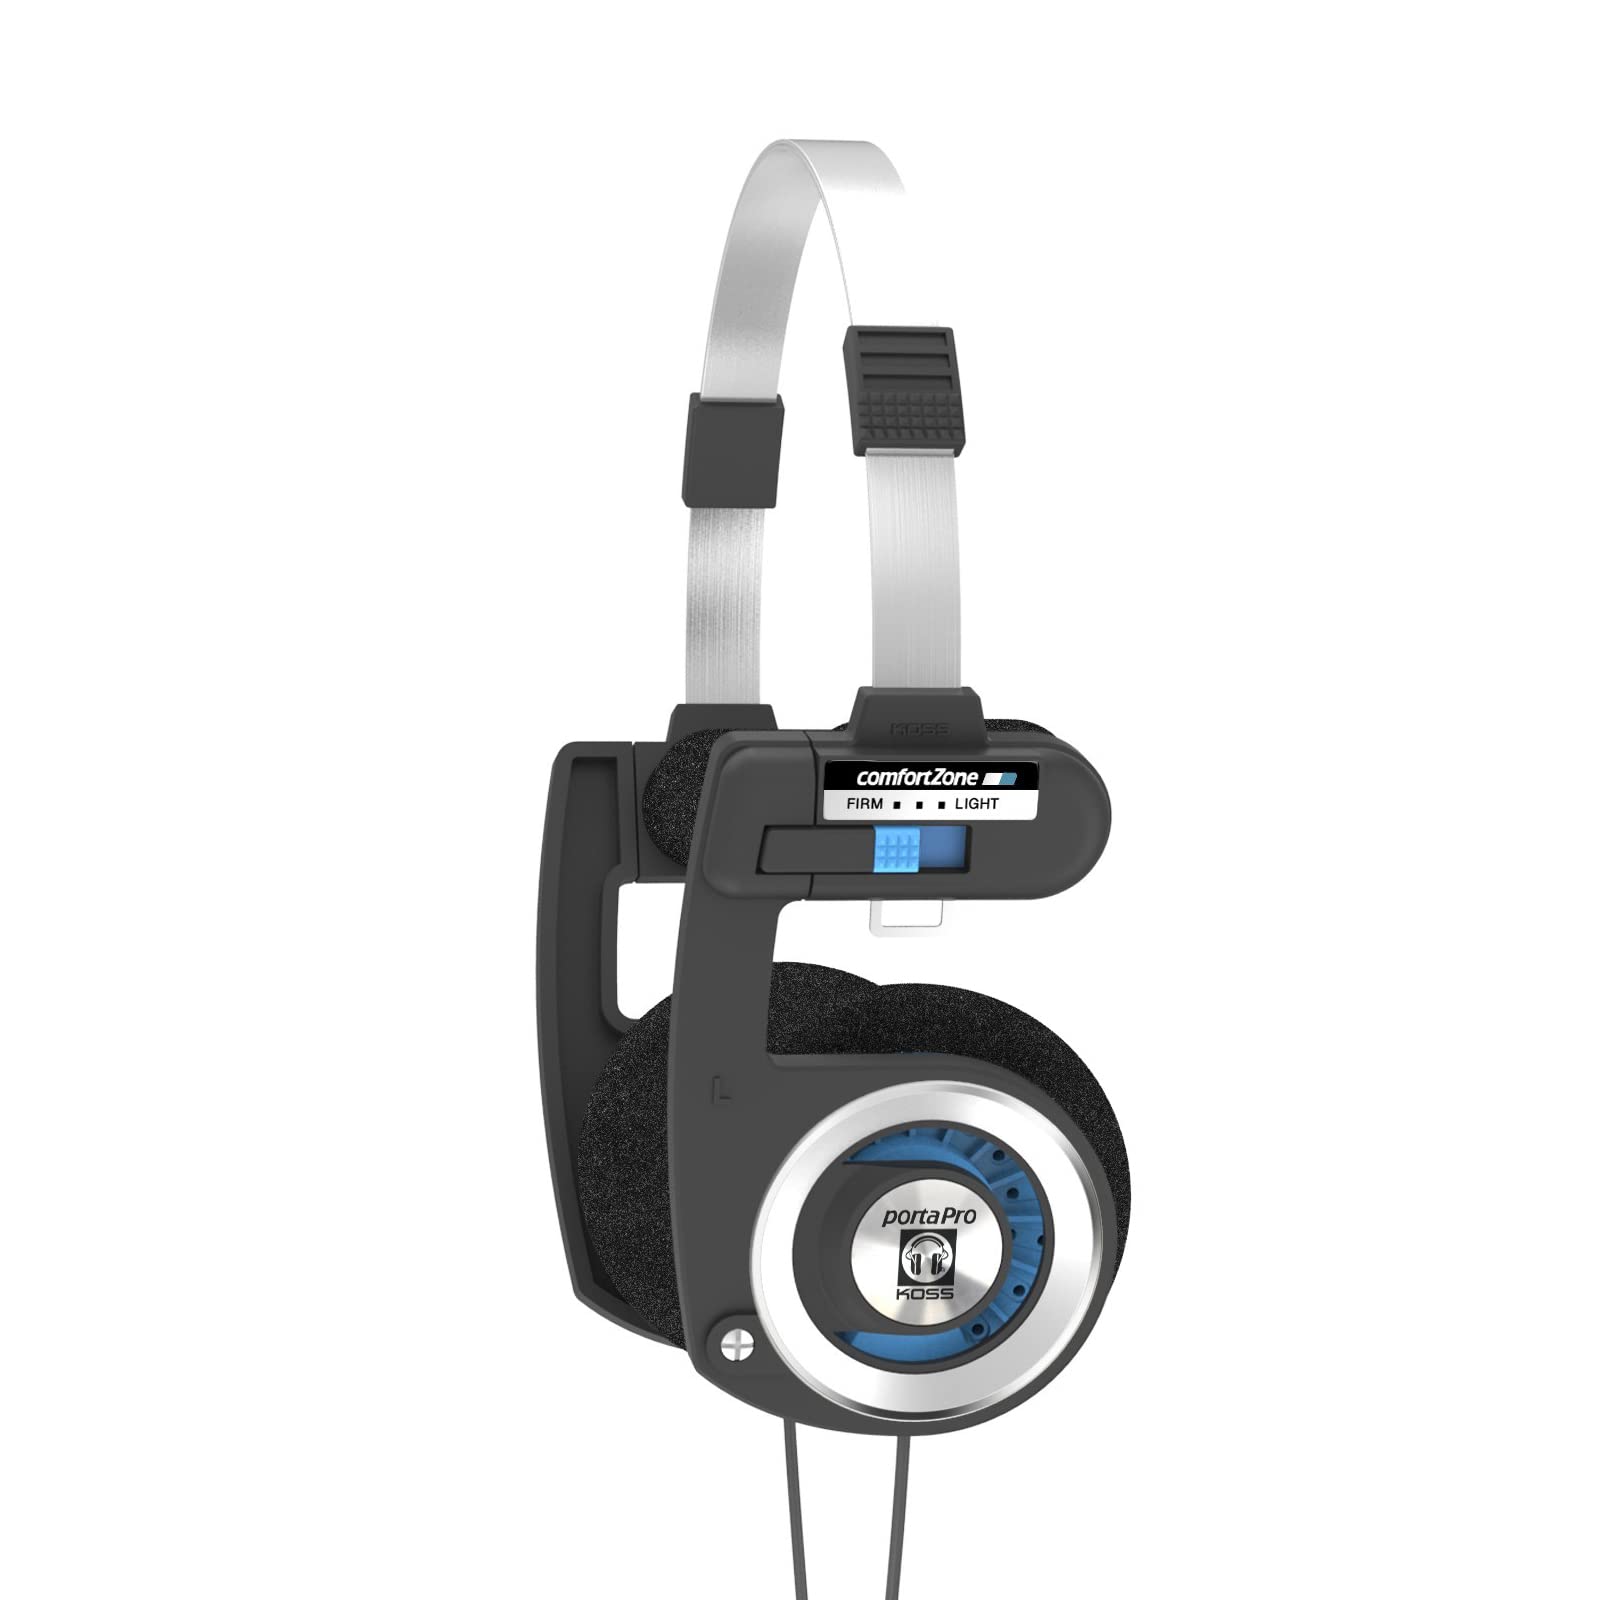 Koss Porta Pro On Ear Headphones with Case, Black / Sil...